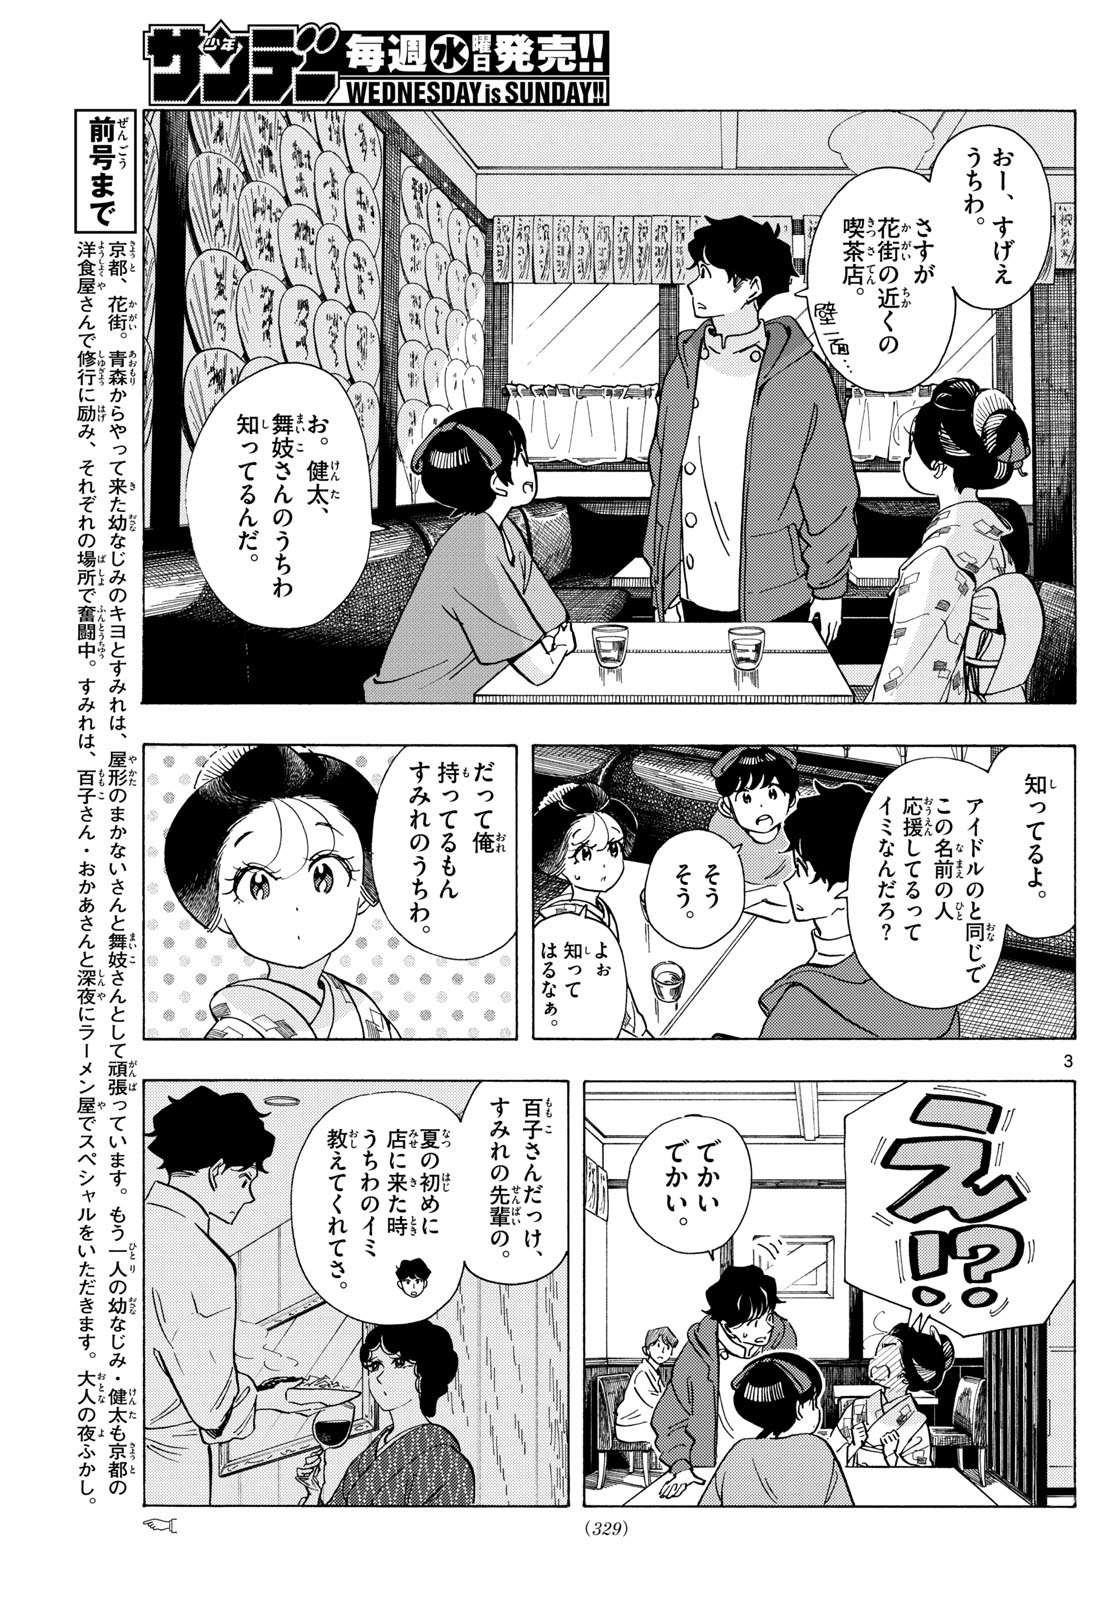 Maiko-san Chi no Makanai-san - Chapter 299 - Page 3